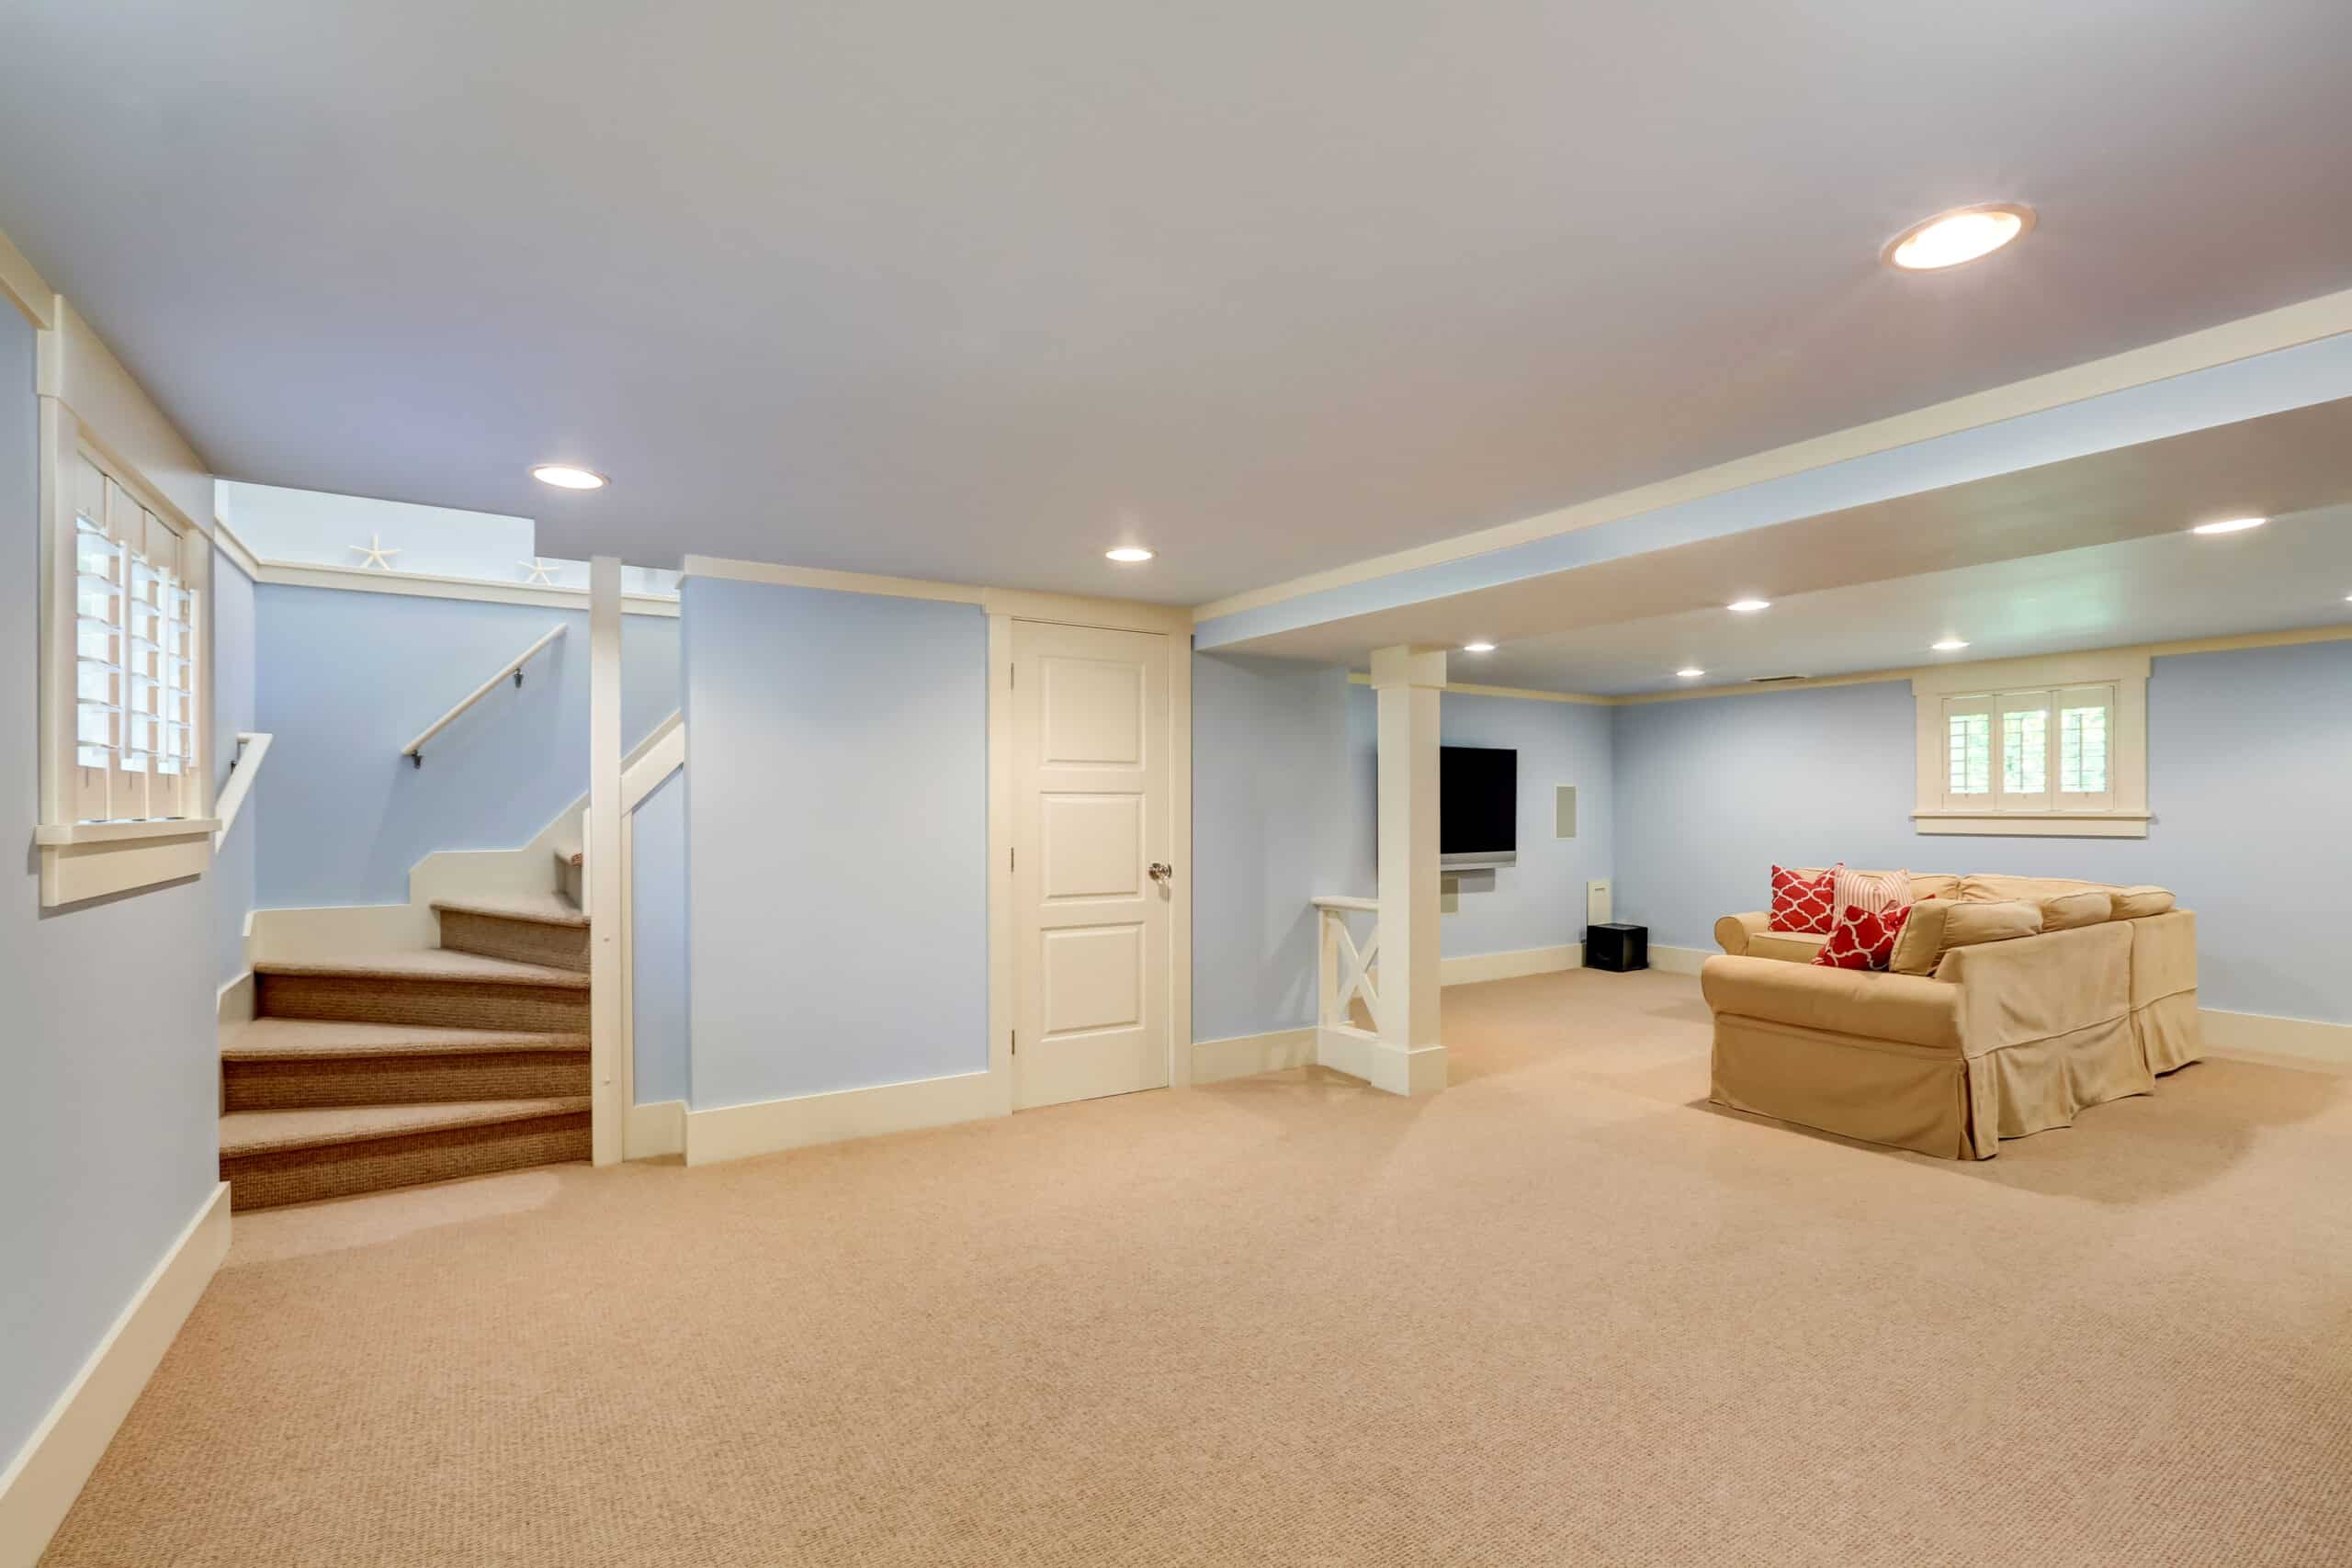 Spacious basement room interior in pastel blue tones. Beige carpet floor and large corner sofa with TV. Northwest, USA